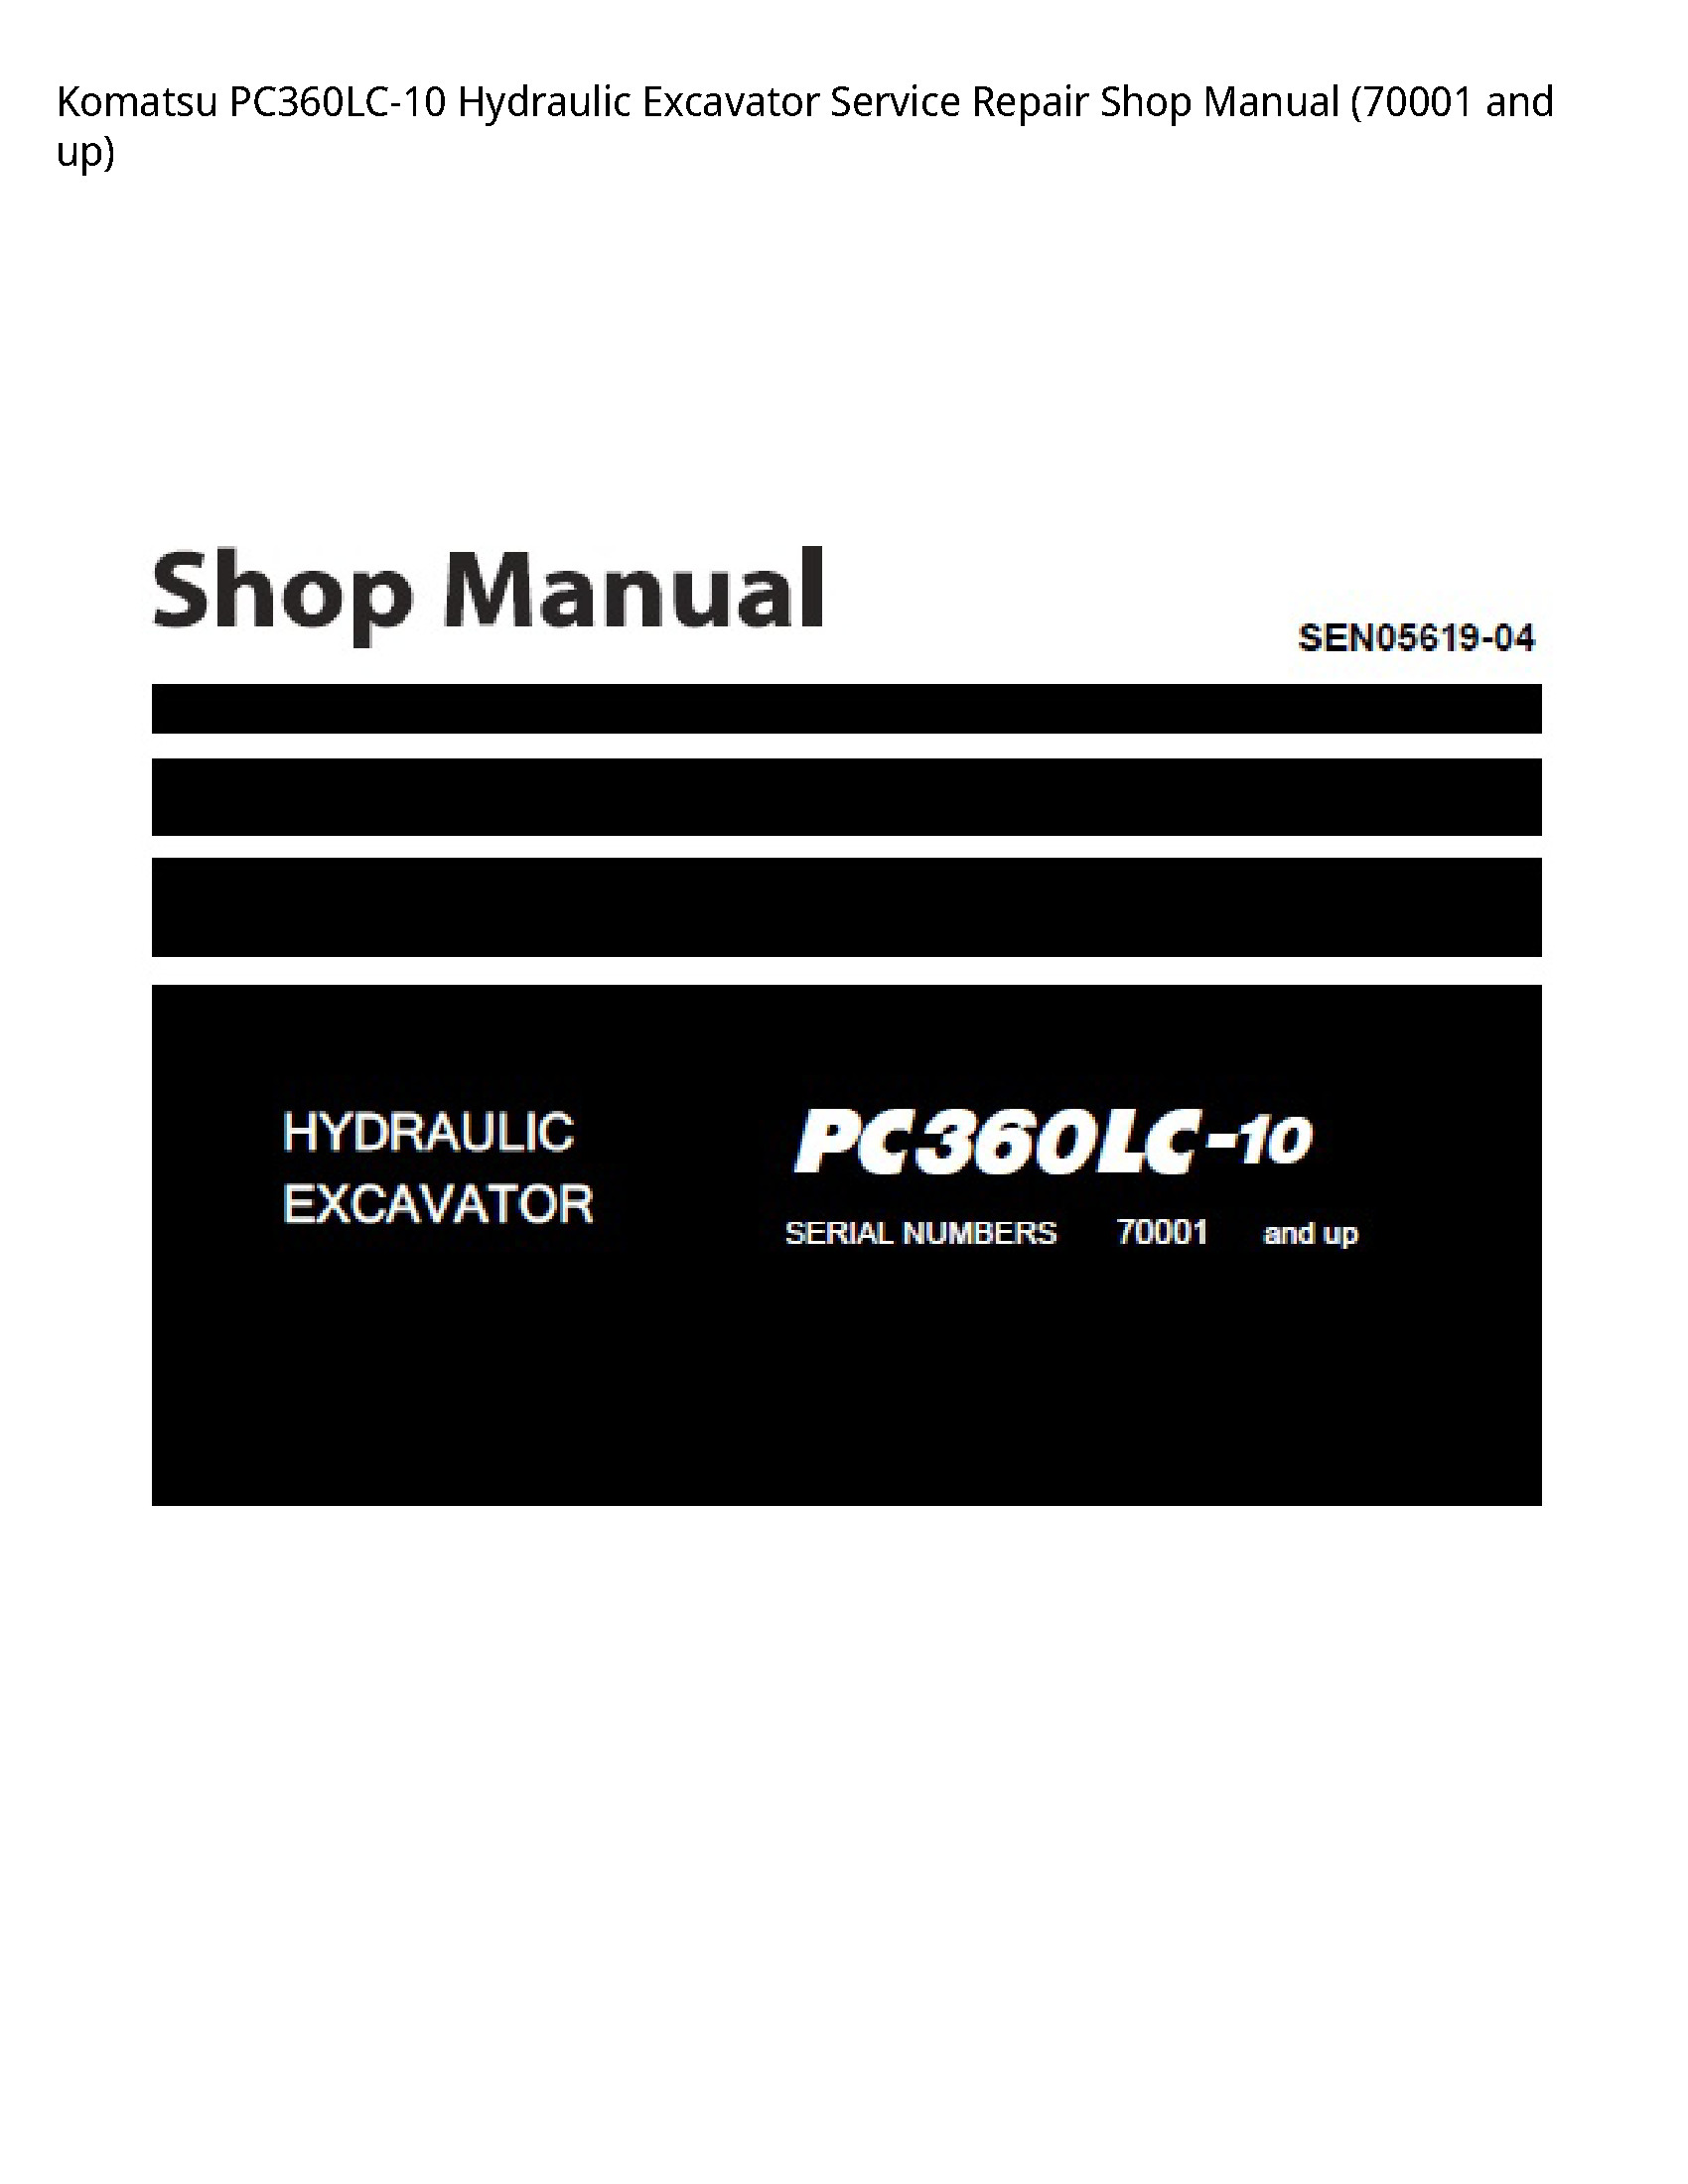 KOMATSU PC360LC-10 Hydraulic Excavator manual